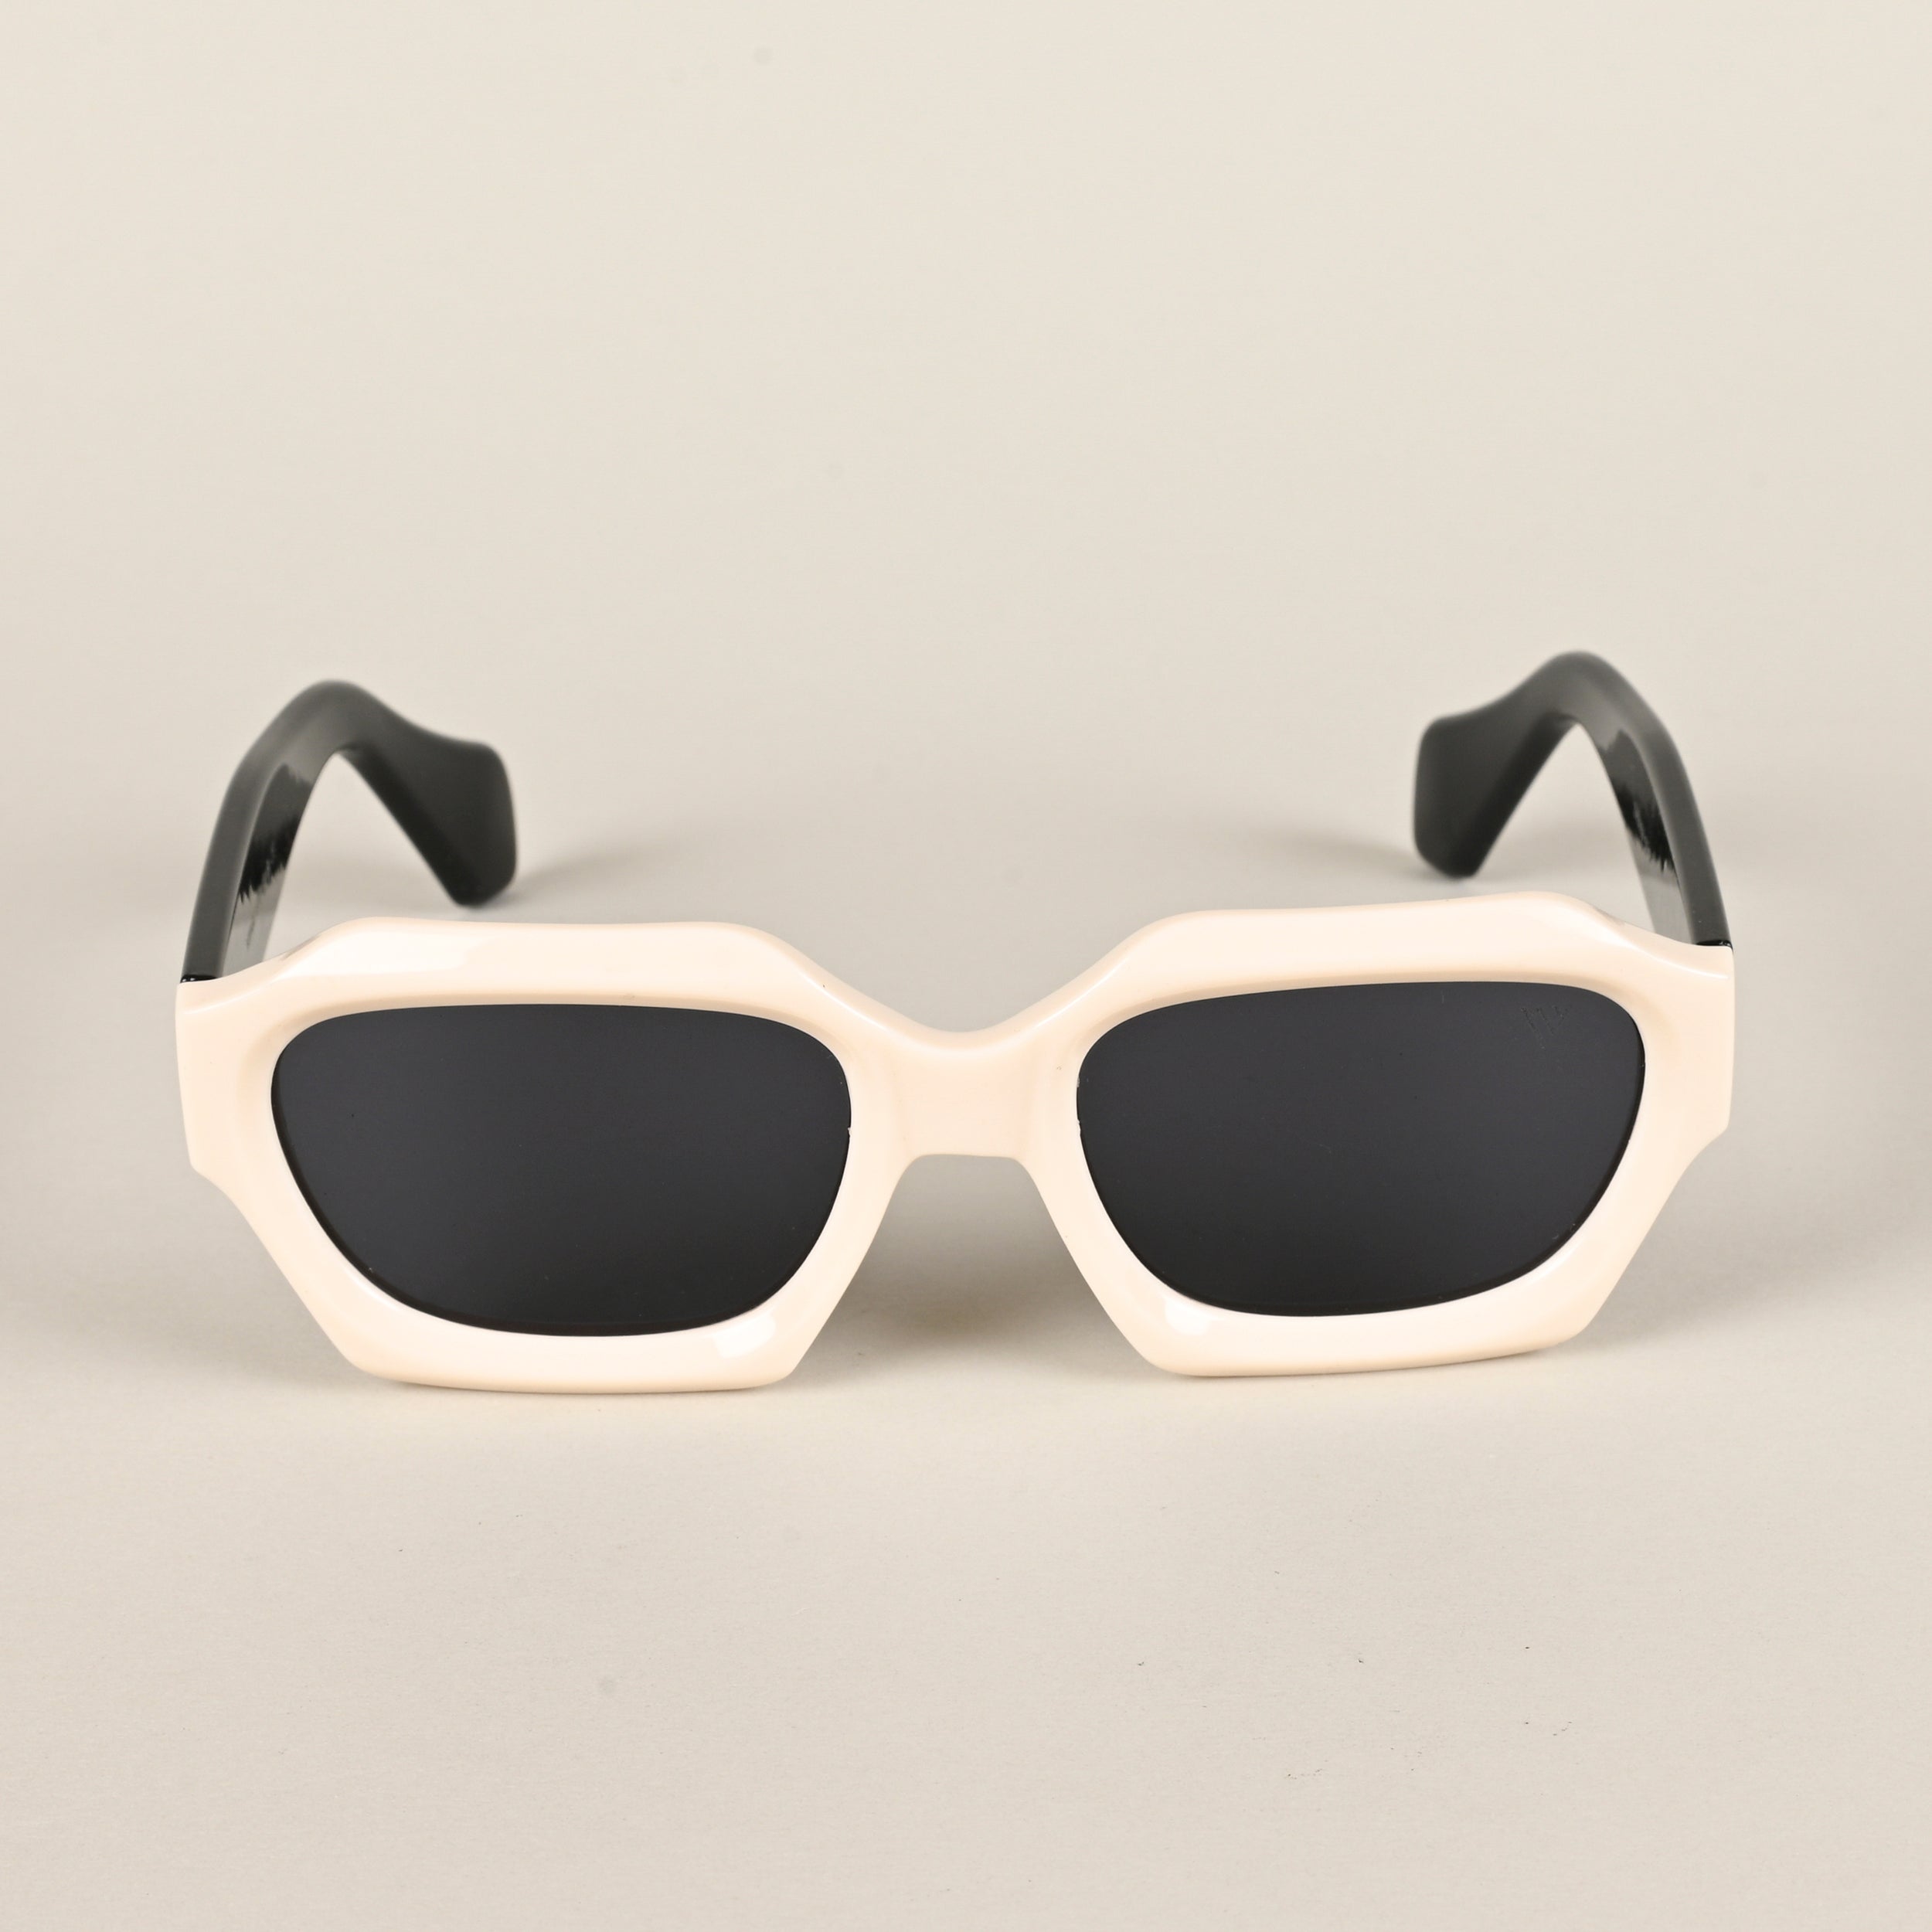 Voyage Black Rectangle Sunglasses for Men & Women - MG4200